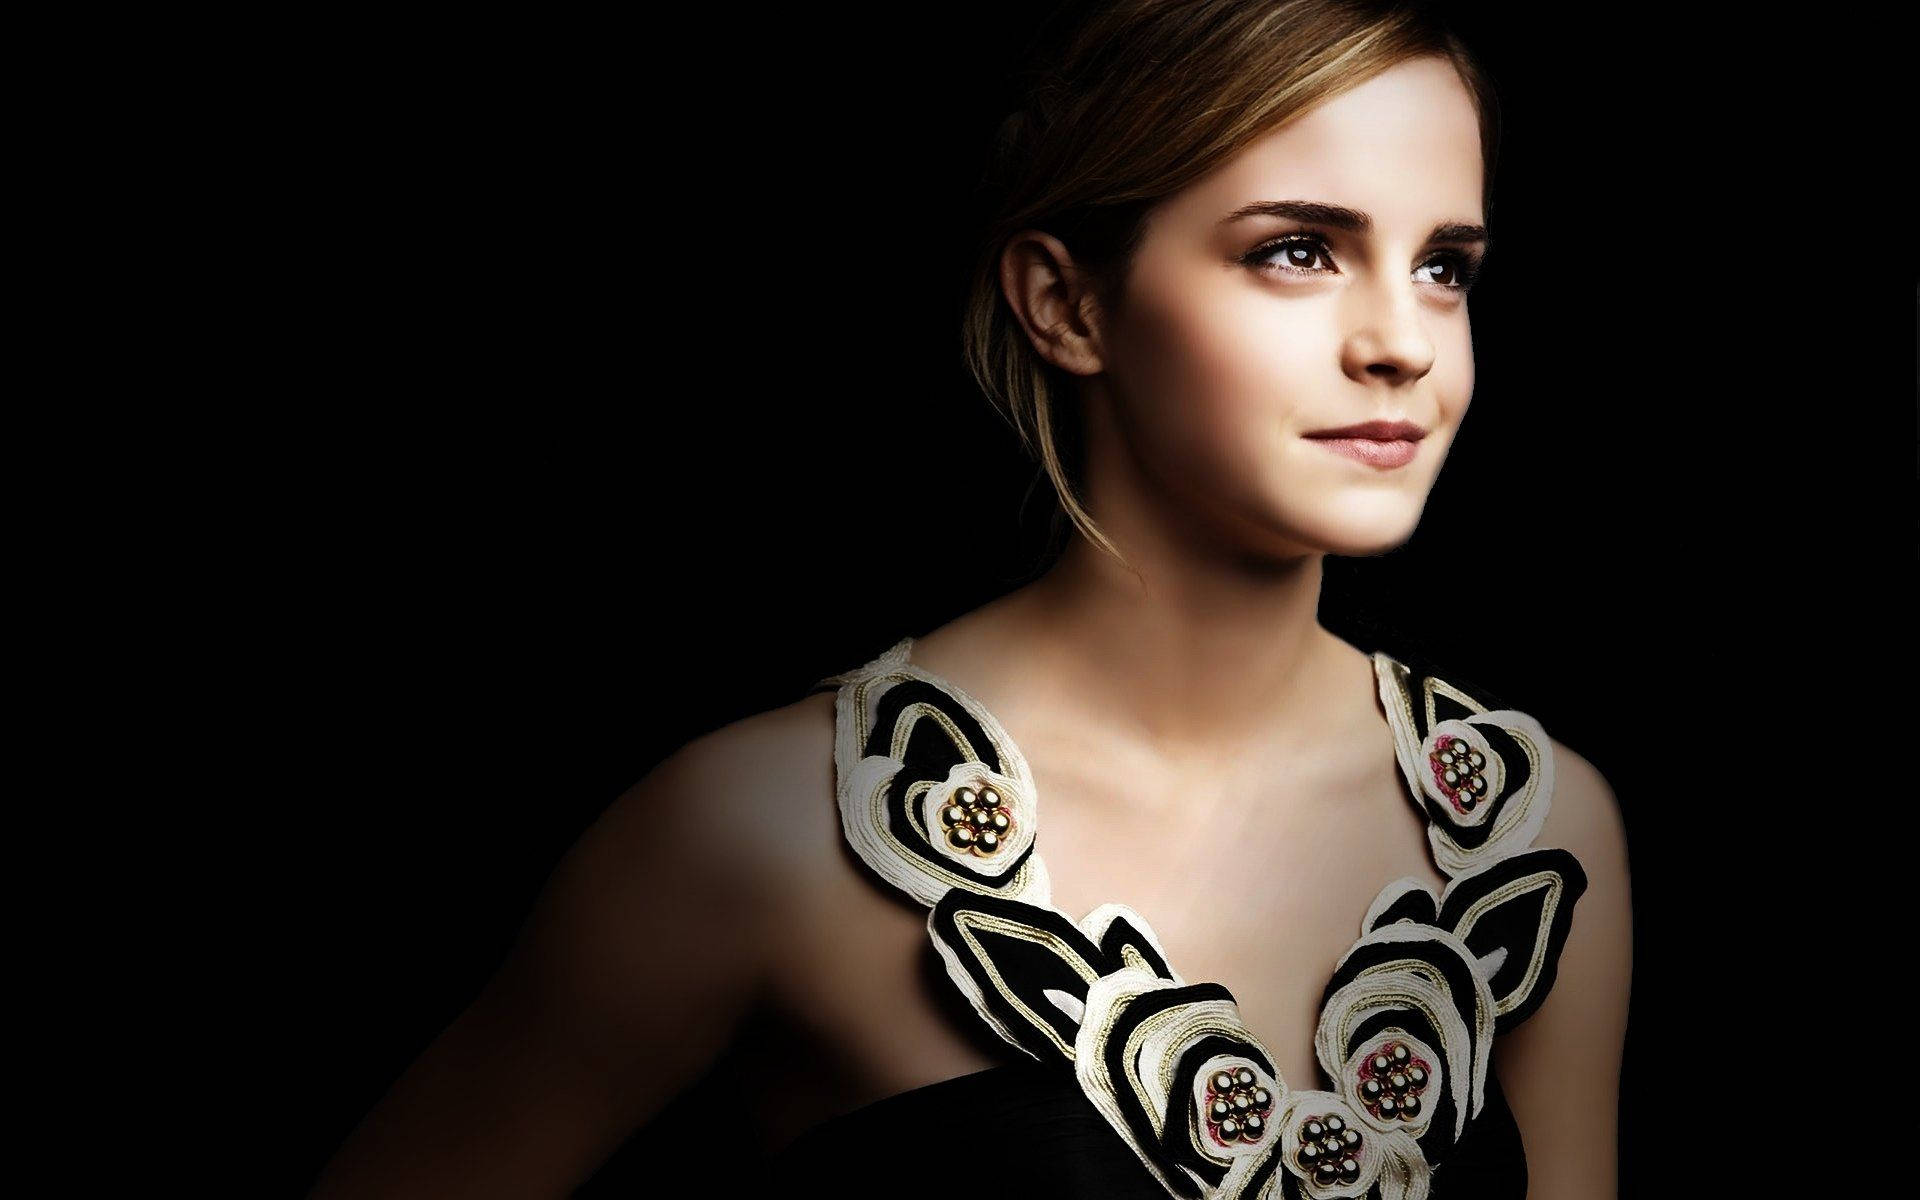 Emma Watson Sharing Her Beautiful Smile. Background